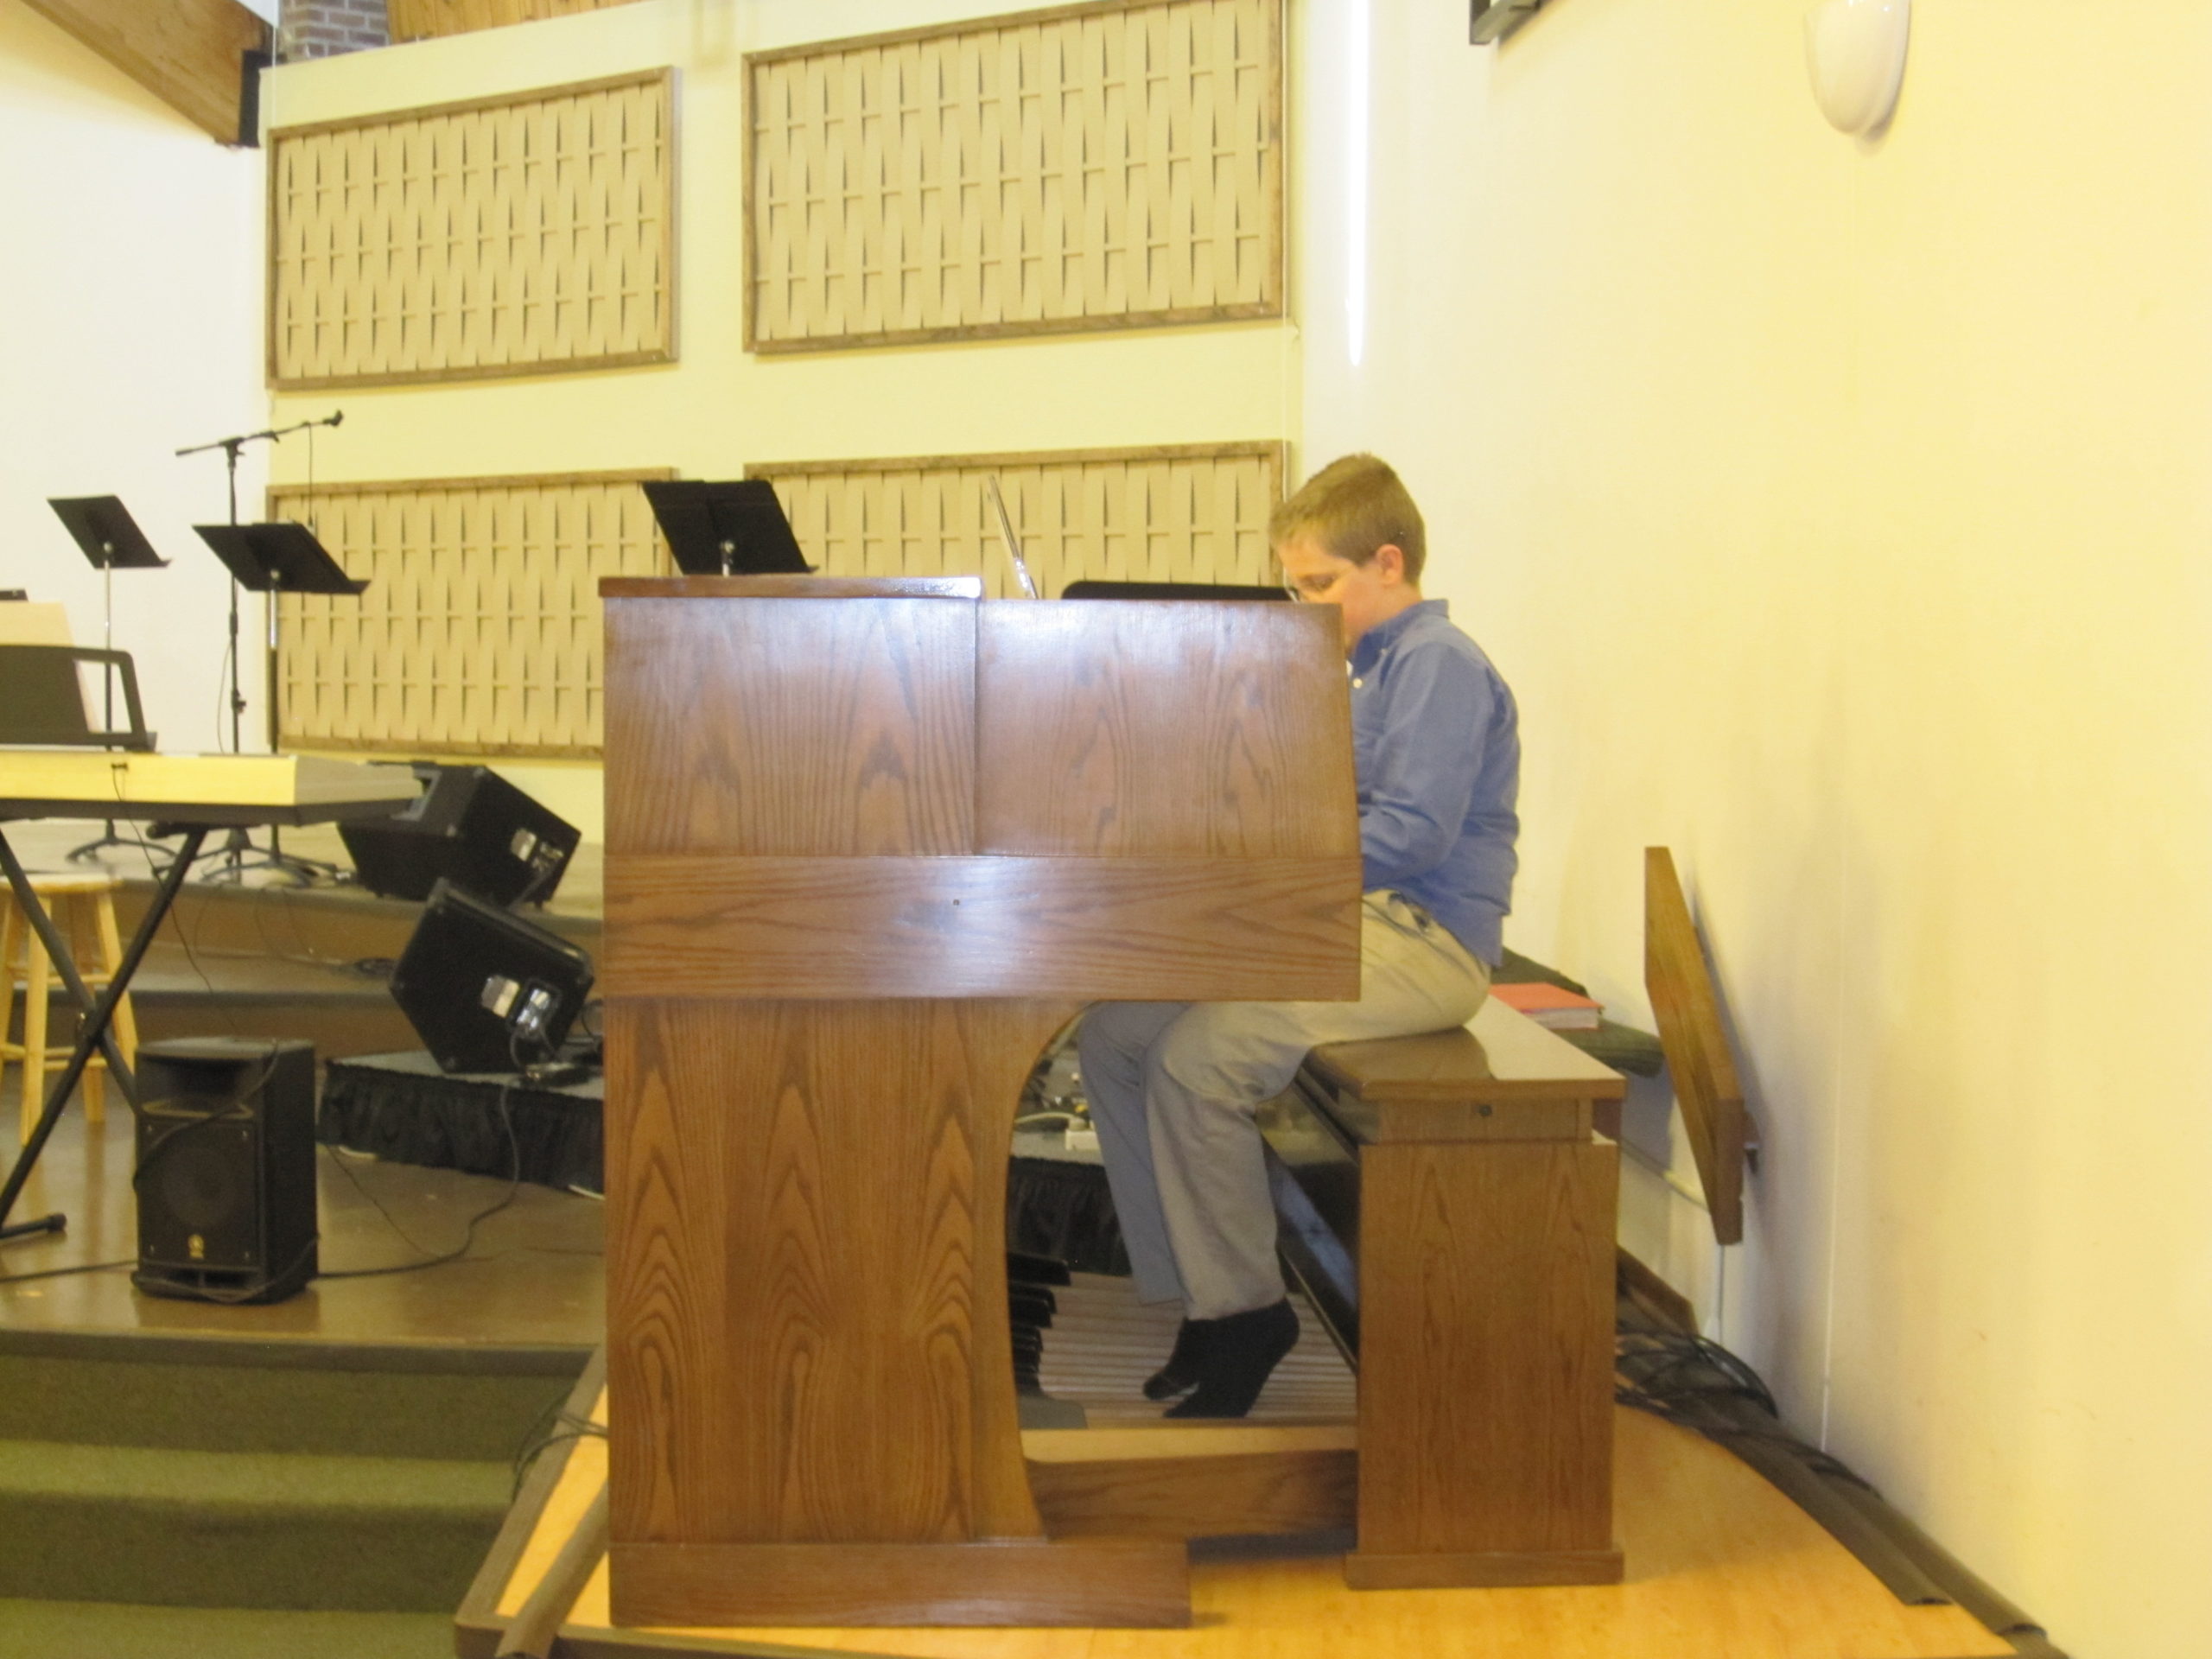 Organist, Max Thompson, hymn sing, Forest Lake, MN 55025